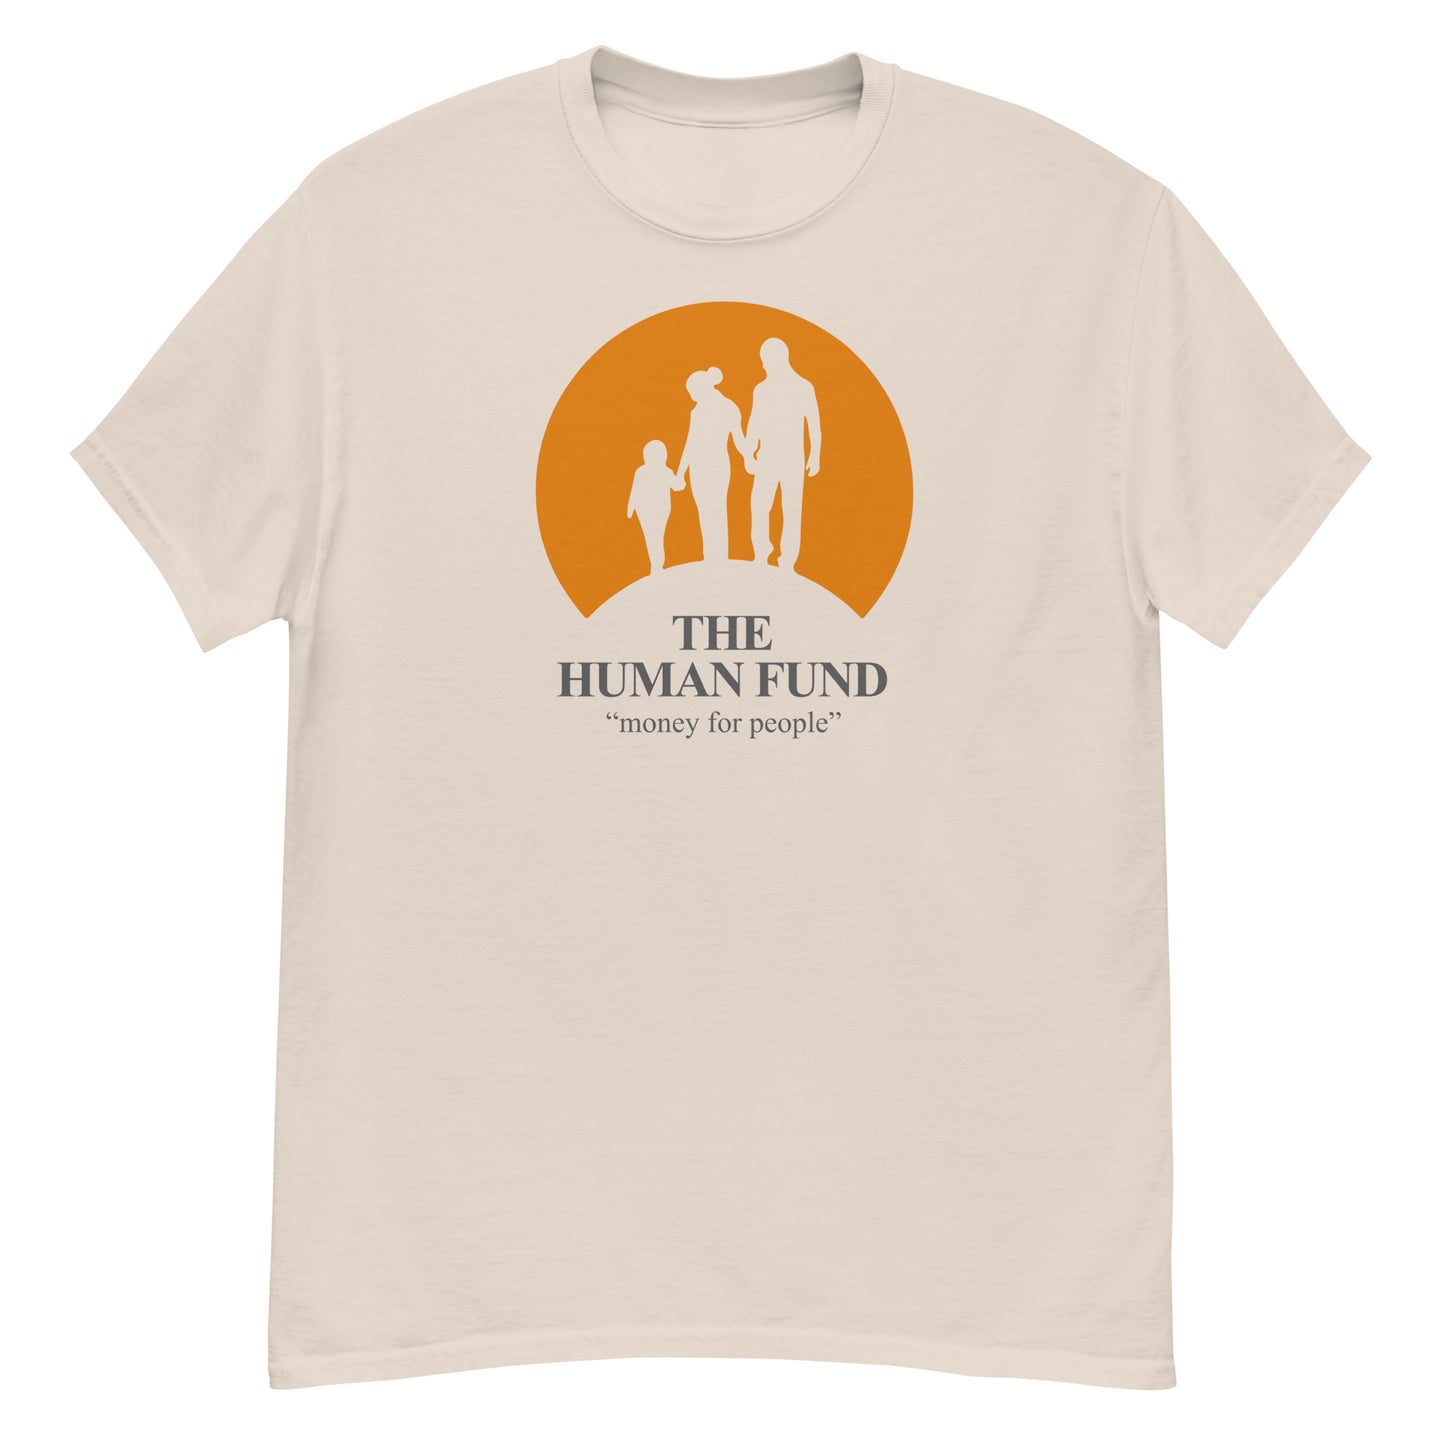 The Human Fund  classic tee